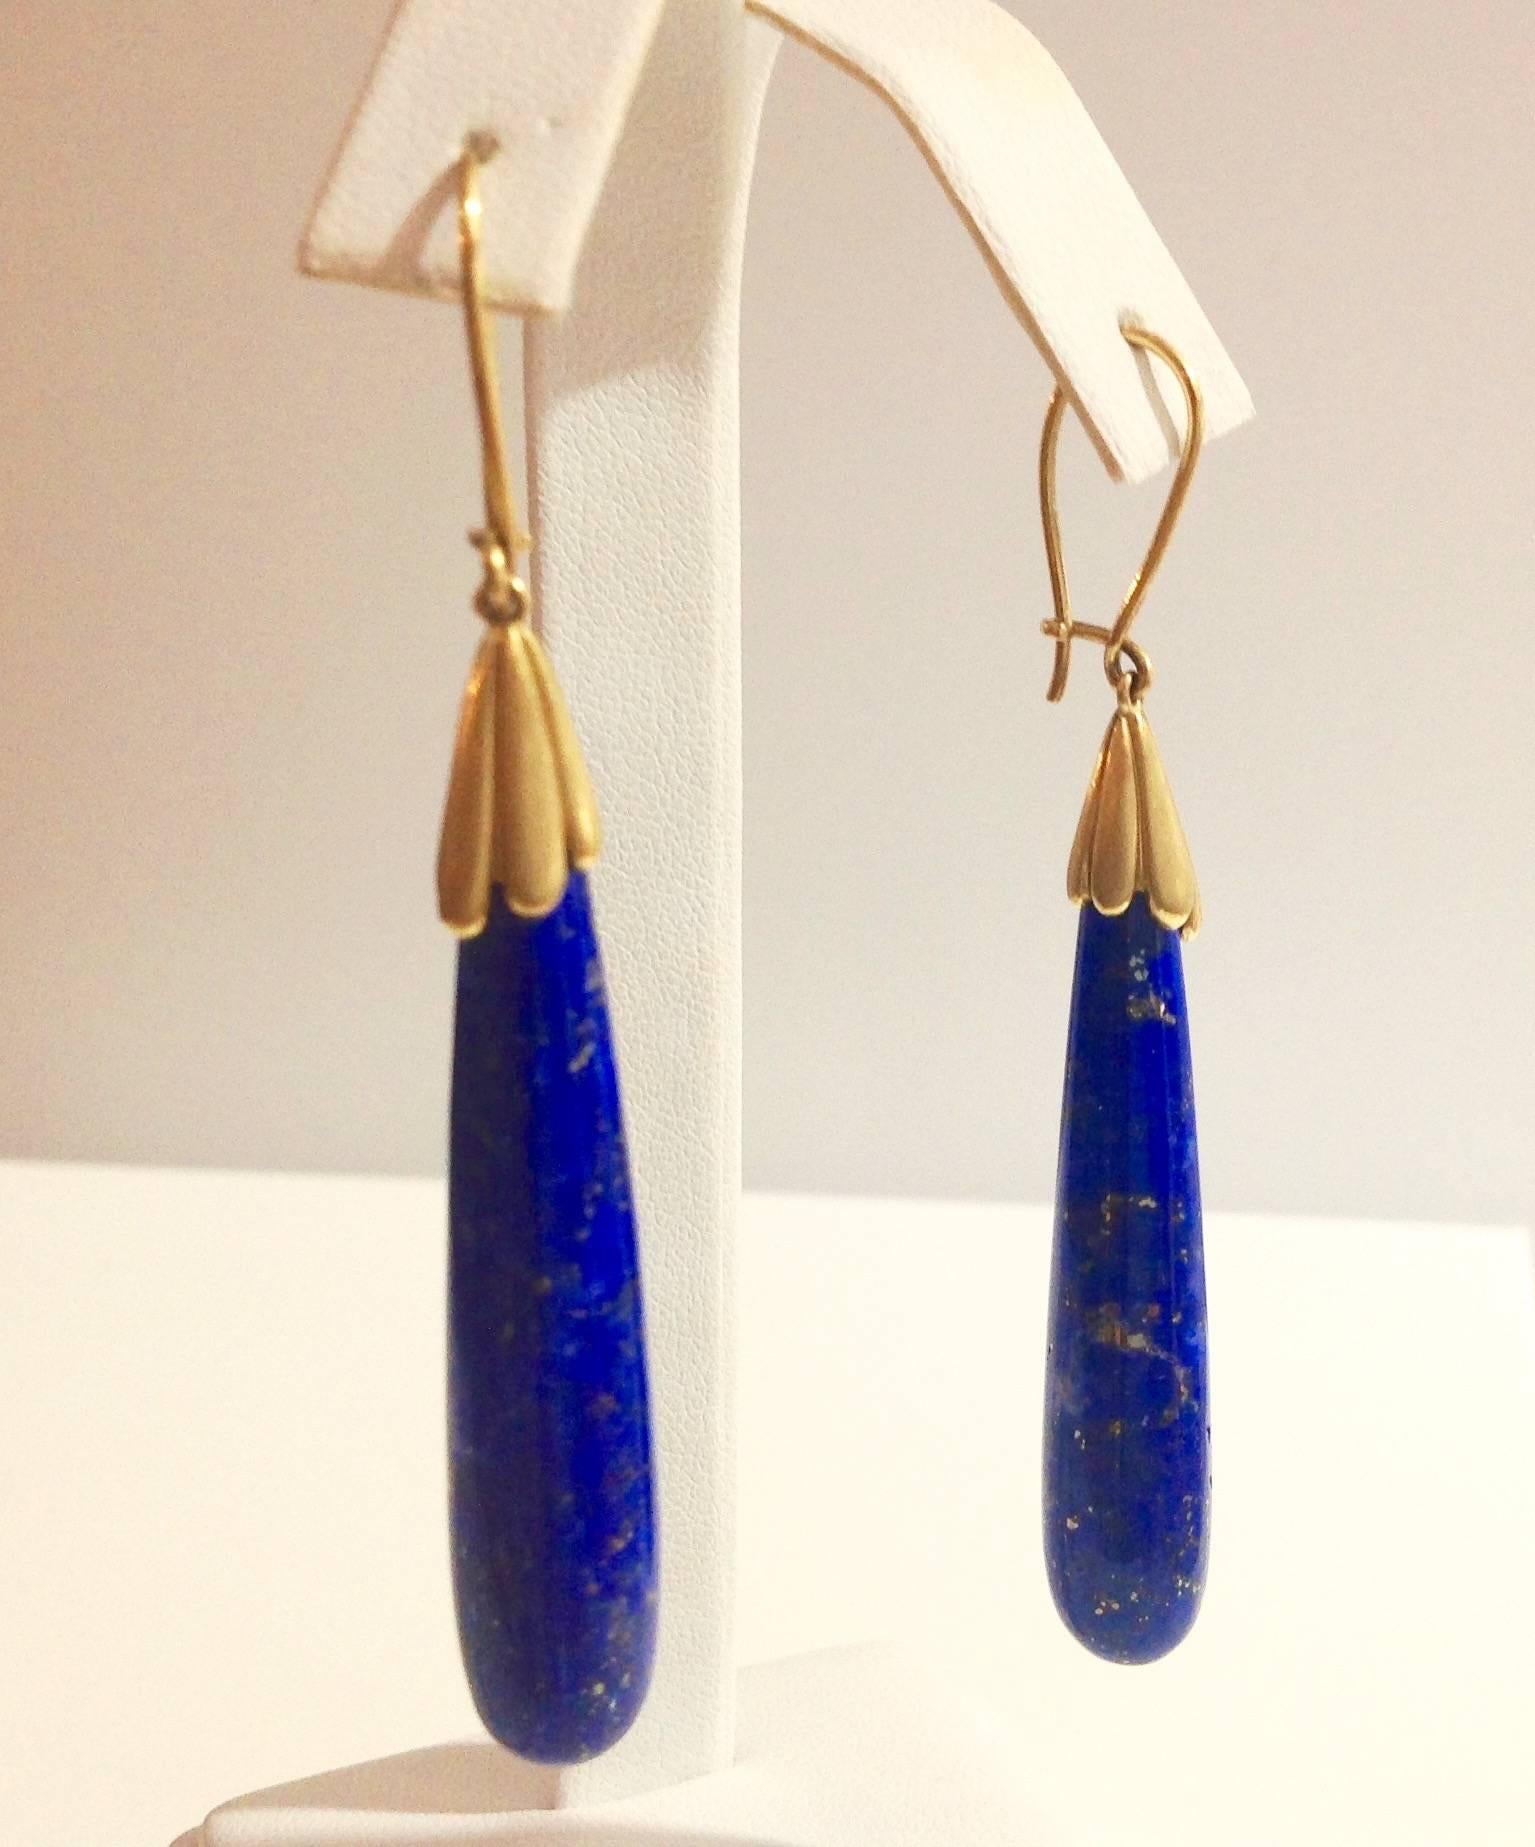 95 Carat Lapis Lazuli Dangle Earrings in 18 Karat Gold For Sale 1